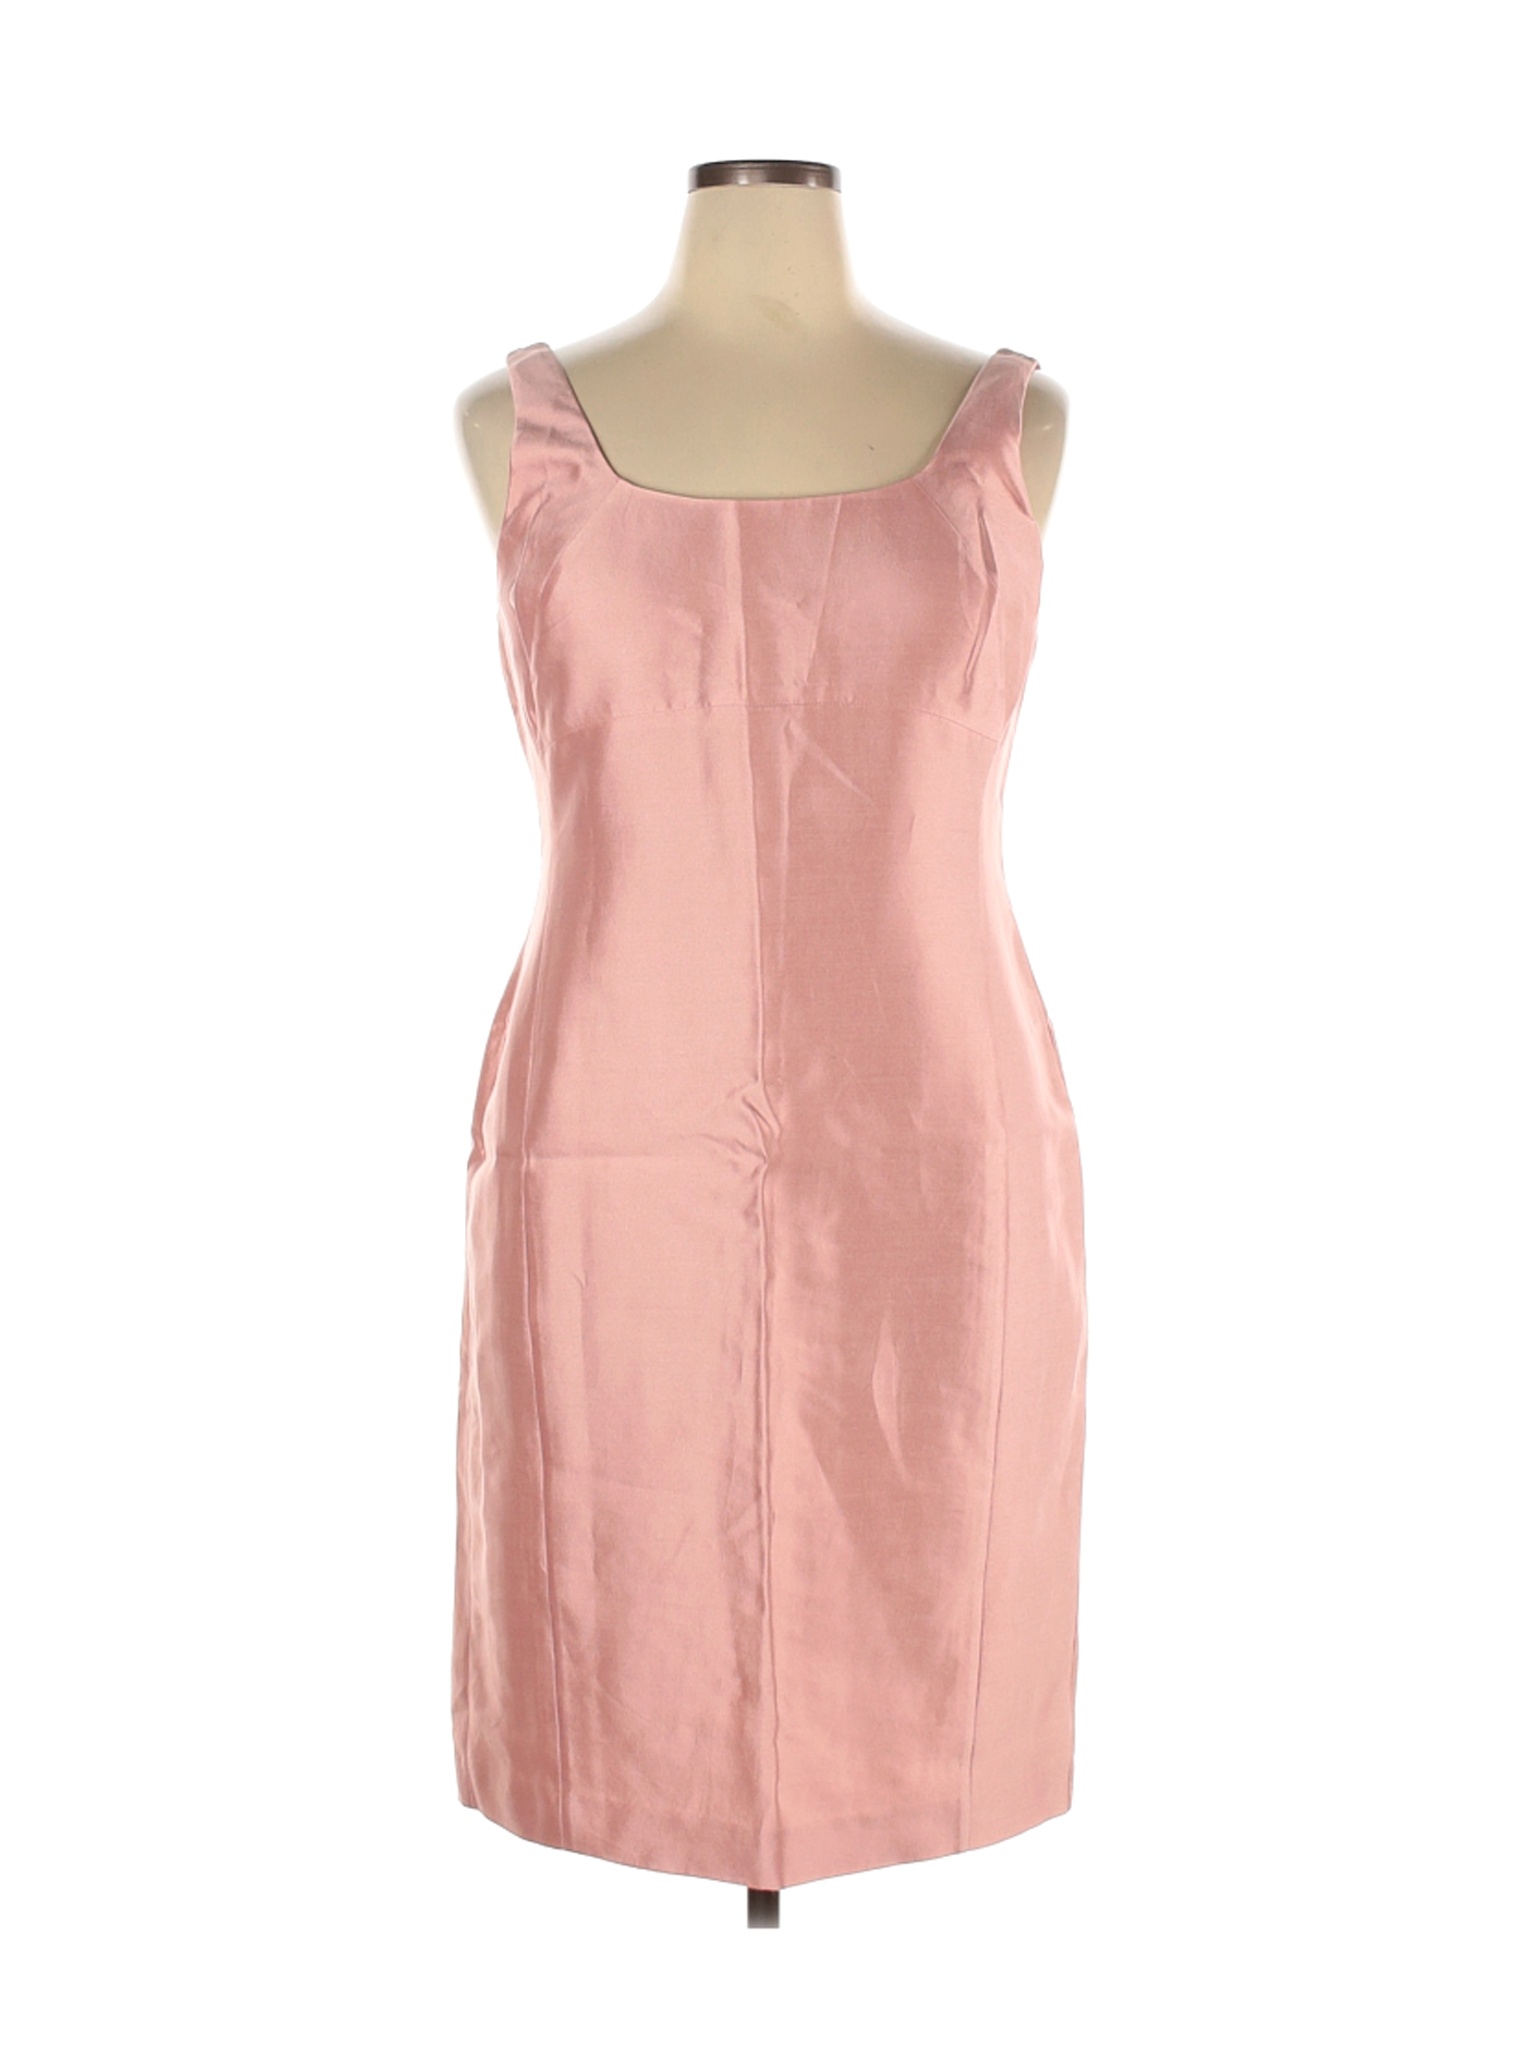 NWT Talbots Women Pink Cocktail Dress 16 | eBay